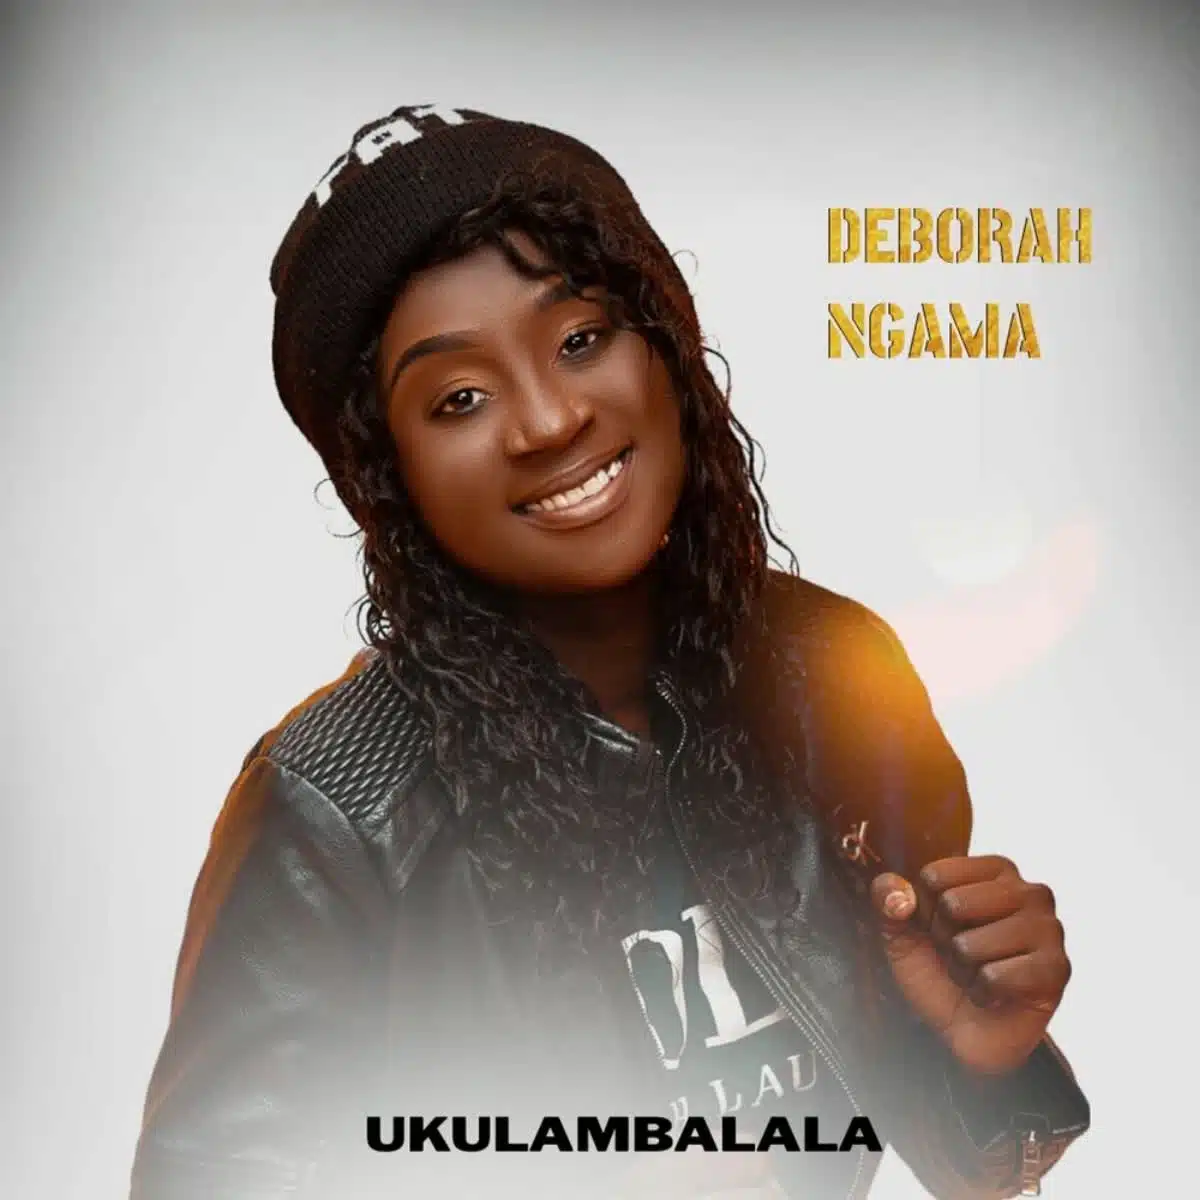 DOWNLOAD: Deborah Ngama – “Ukulambalala” Mp3